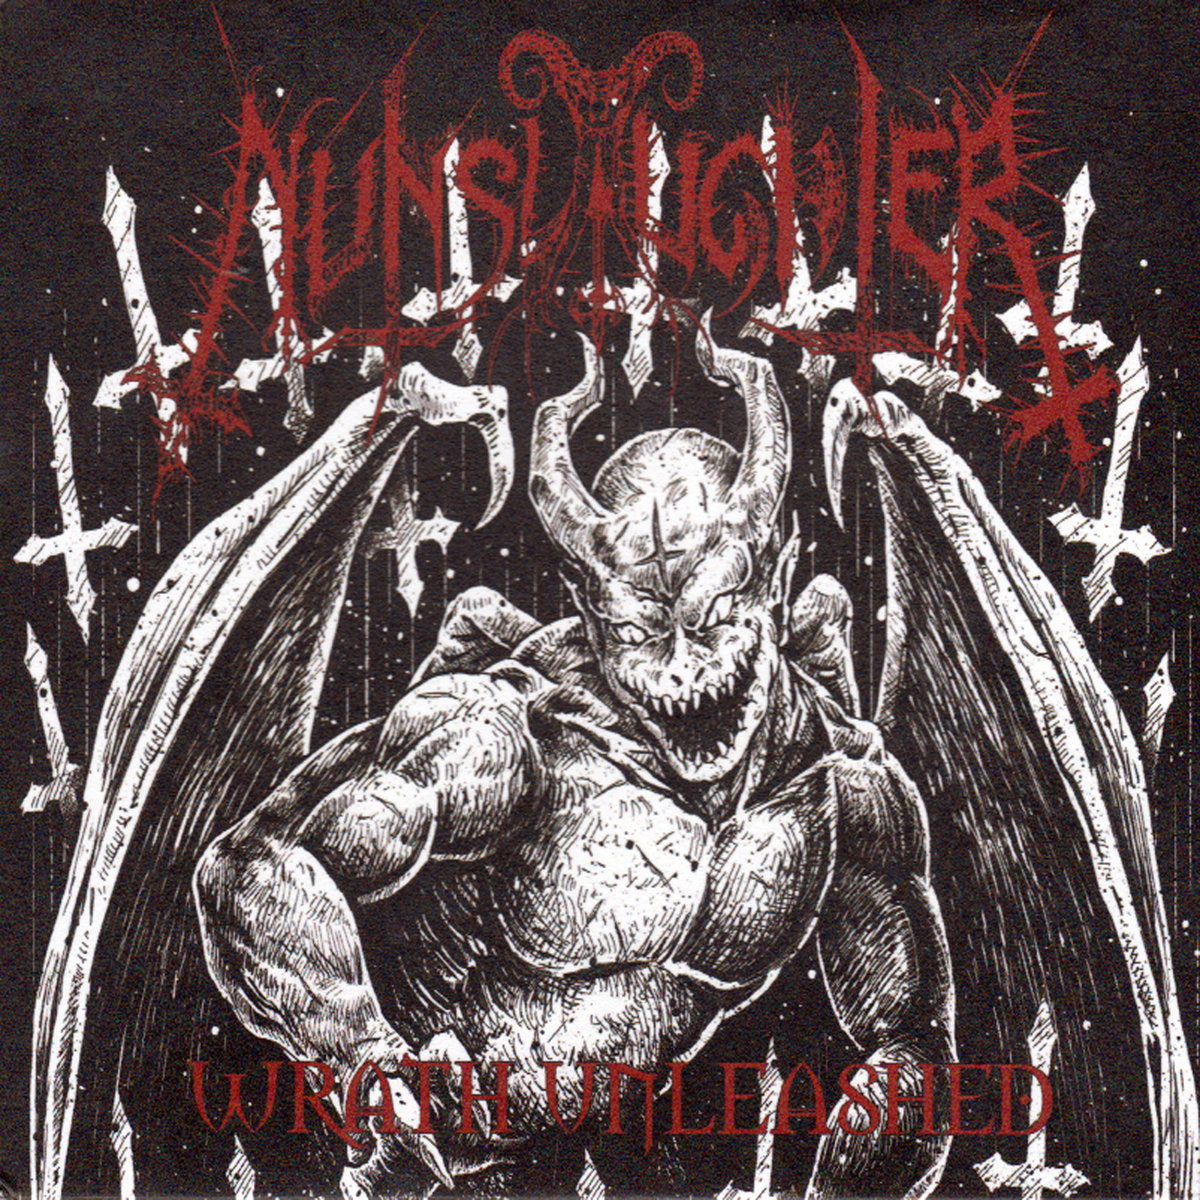 Nunslaughter - Wrath Unleashed digipak demo CD